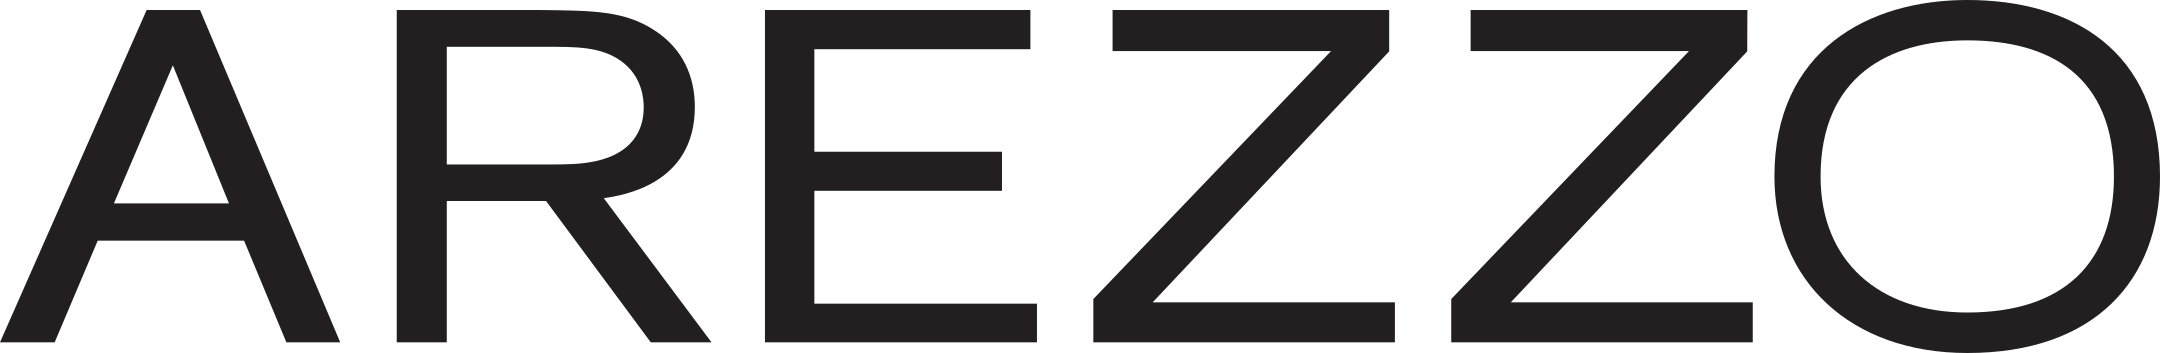 Arezzo Logo.